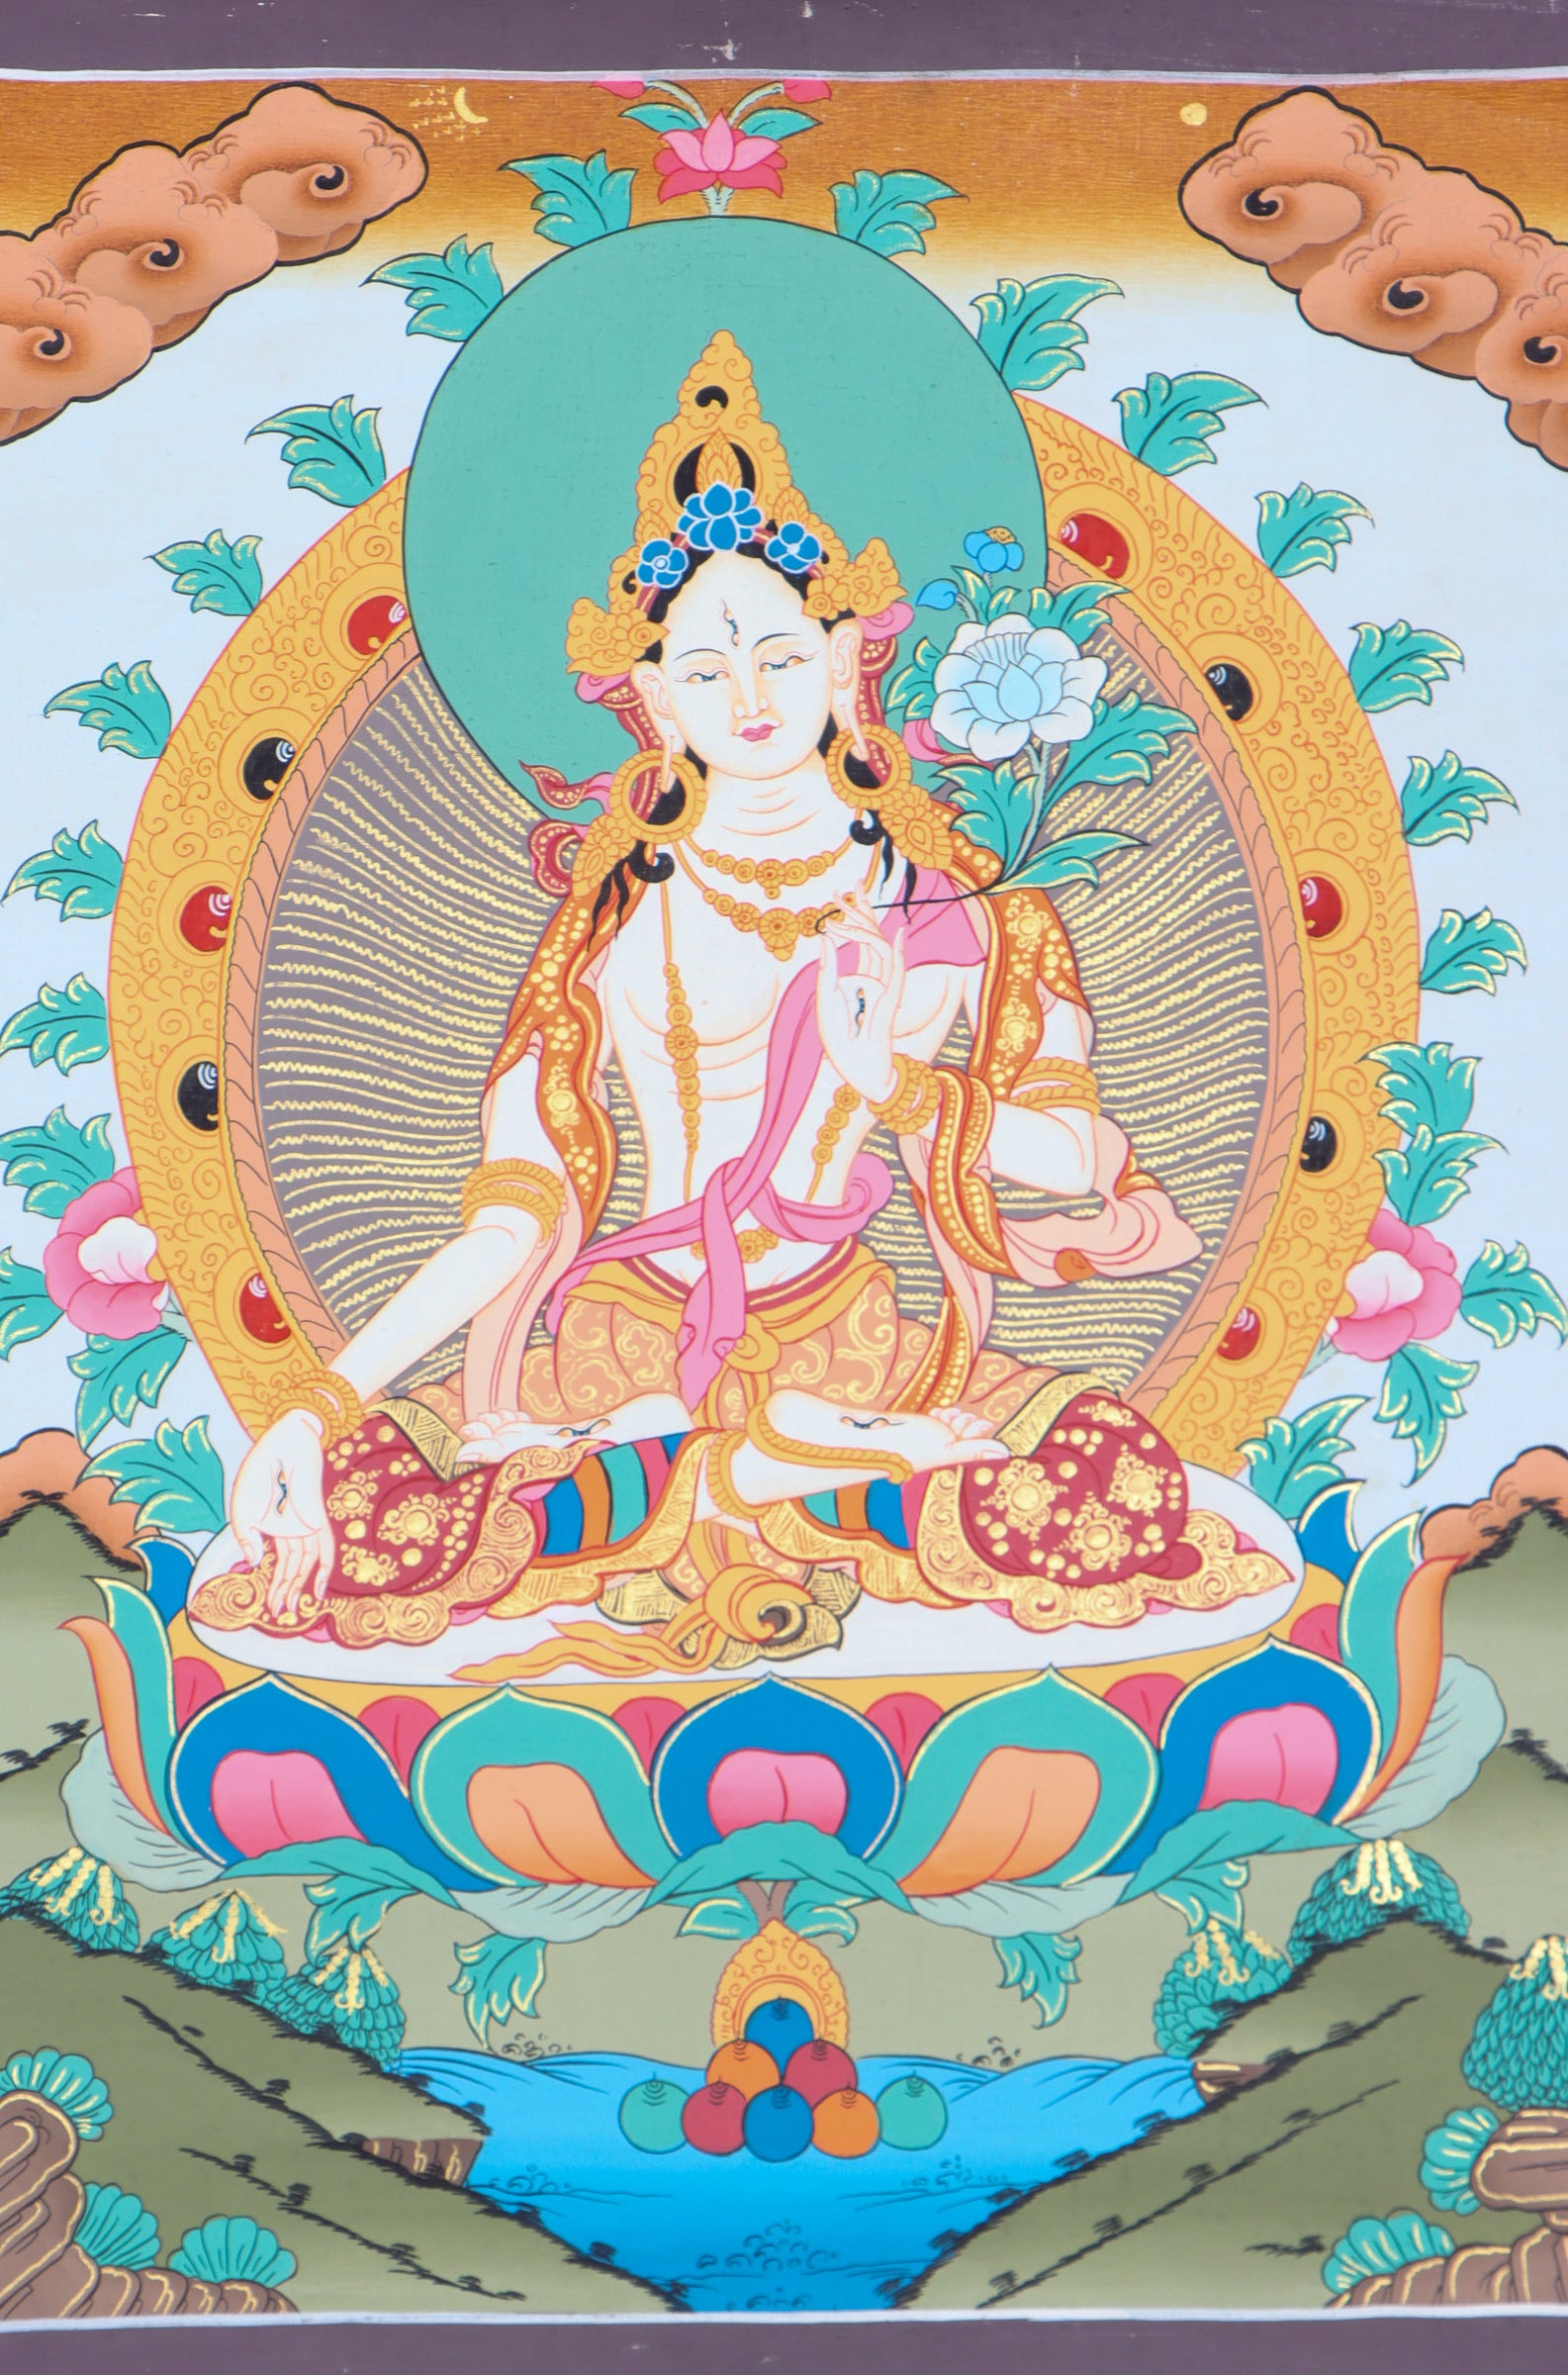 White Tara Thangka Painting for prayer and meditation.